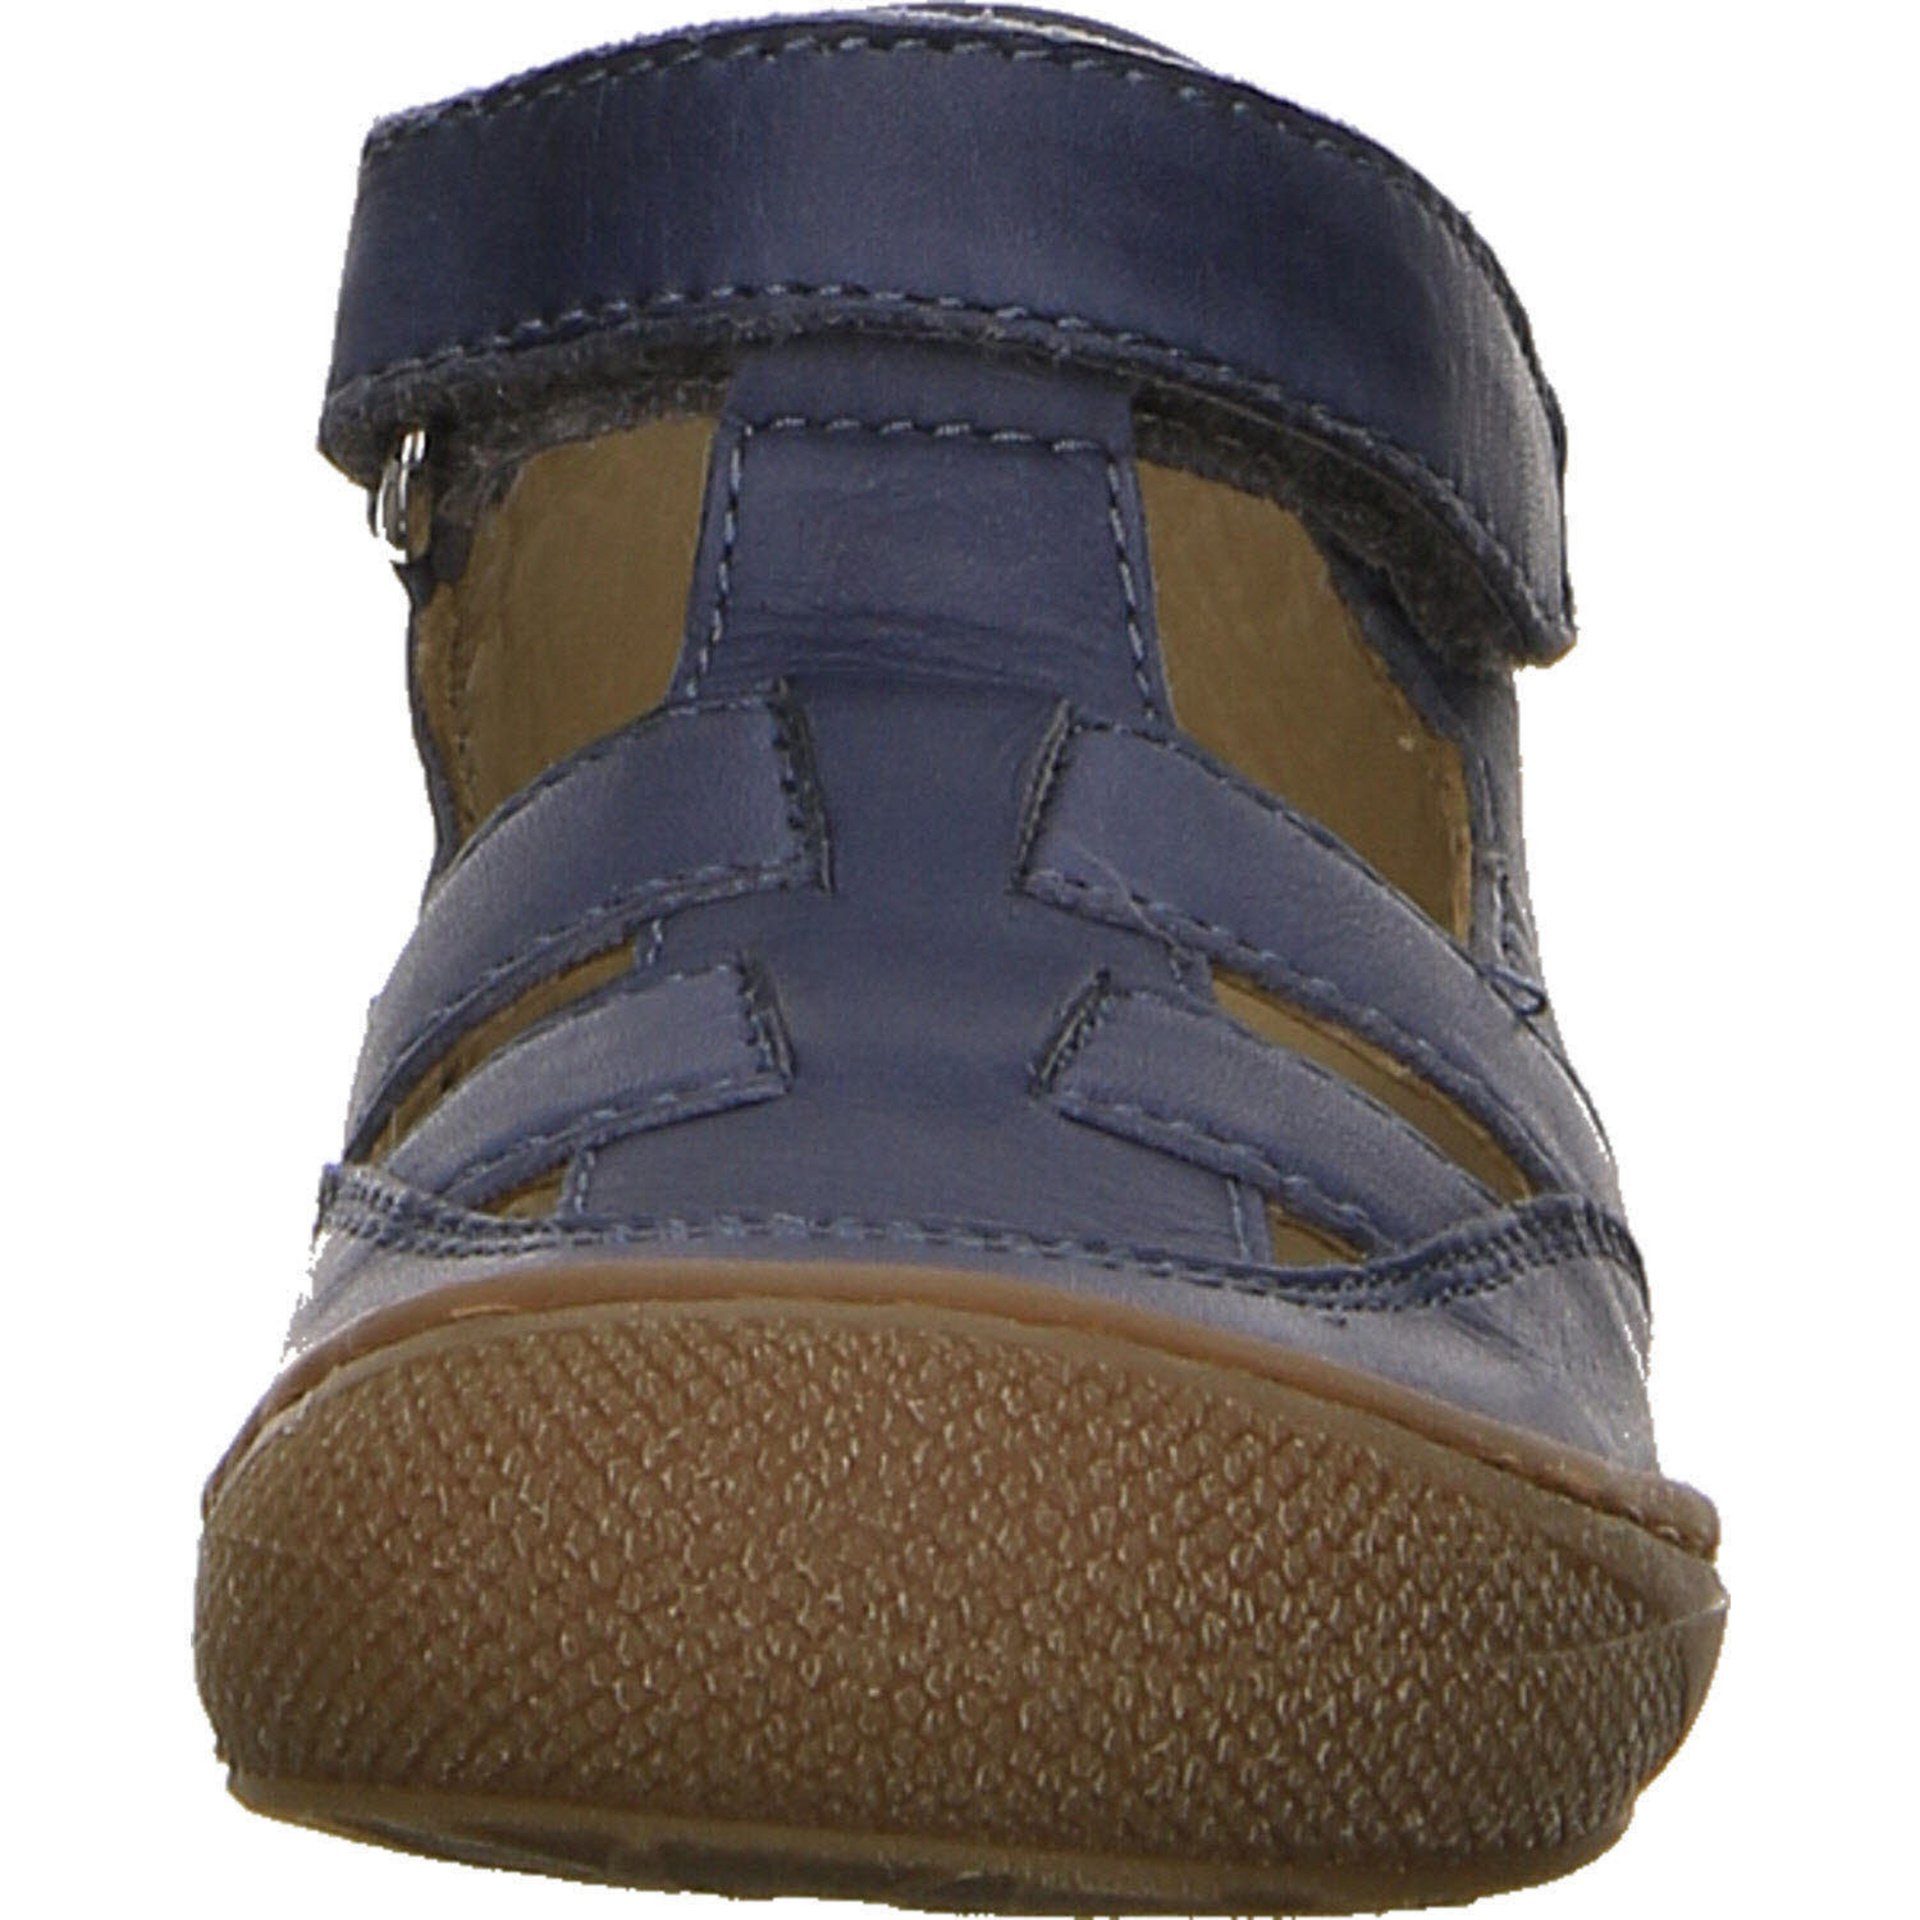 Naturino Mädchen Sandalen Schuhe Wad Minilette Kinderschuhe Sandale Glattleder blau mittel